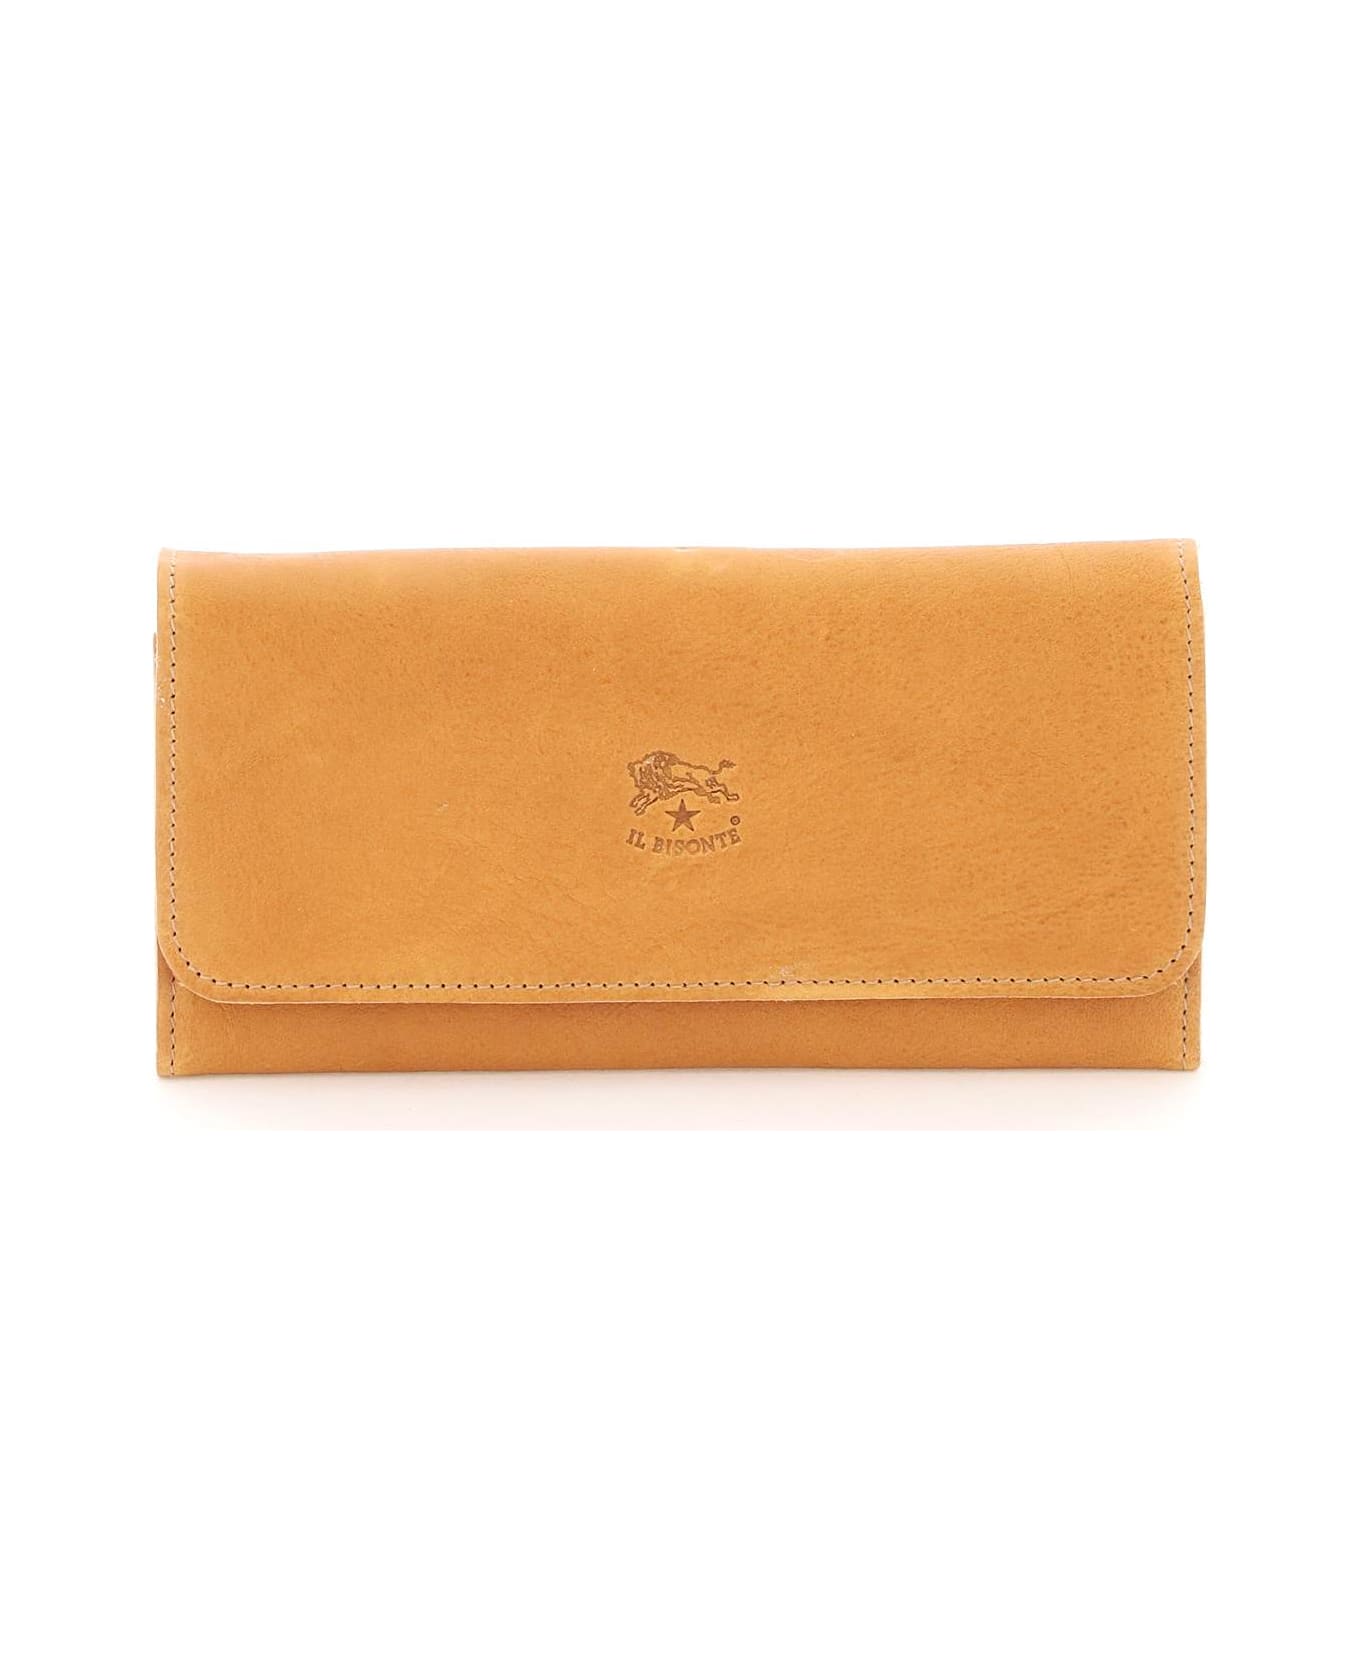 Il Bisonte Leather Wallet - NATURALE (Beige)